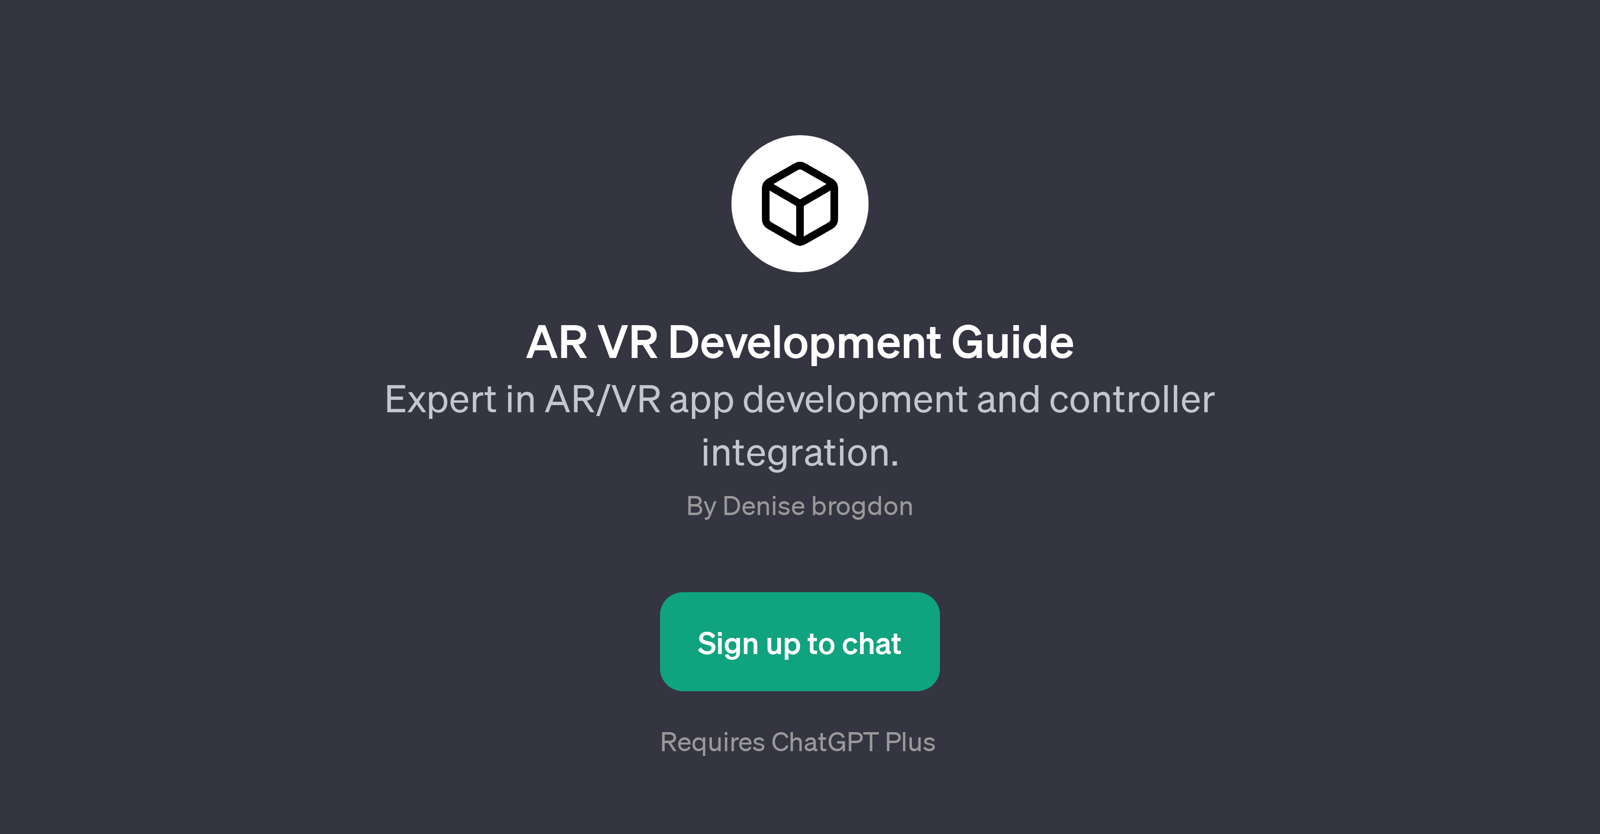 AR VR Development Guide website